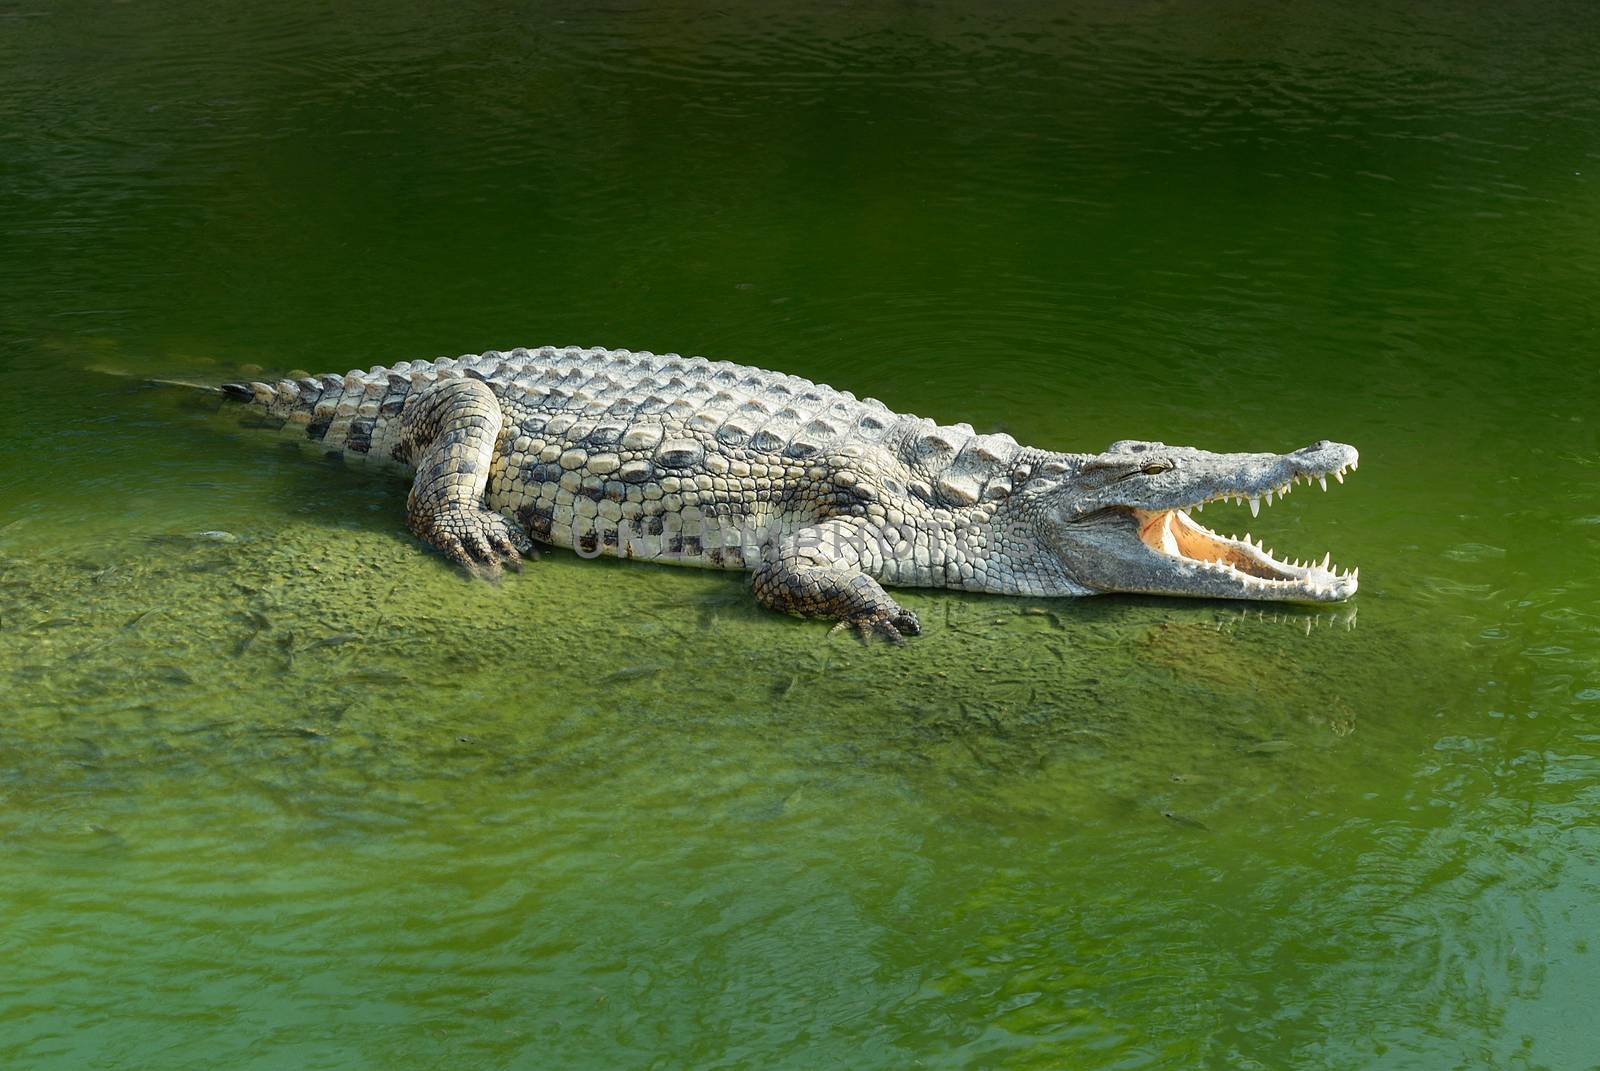 Alligator by ventdusud